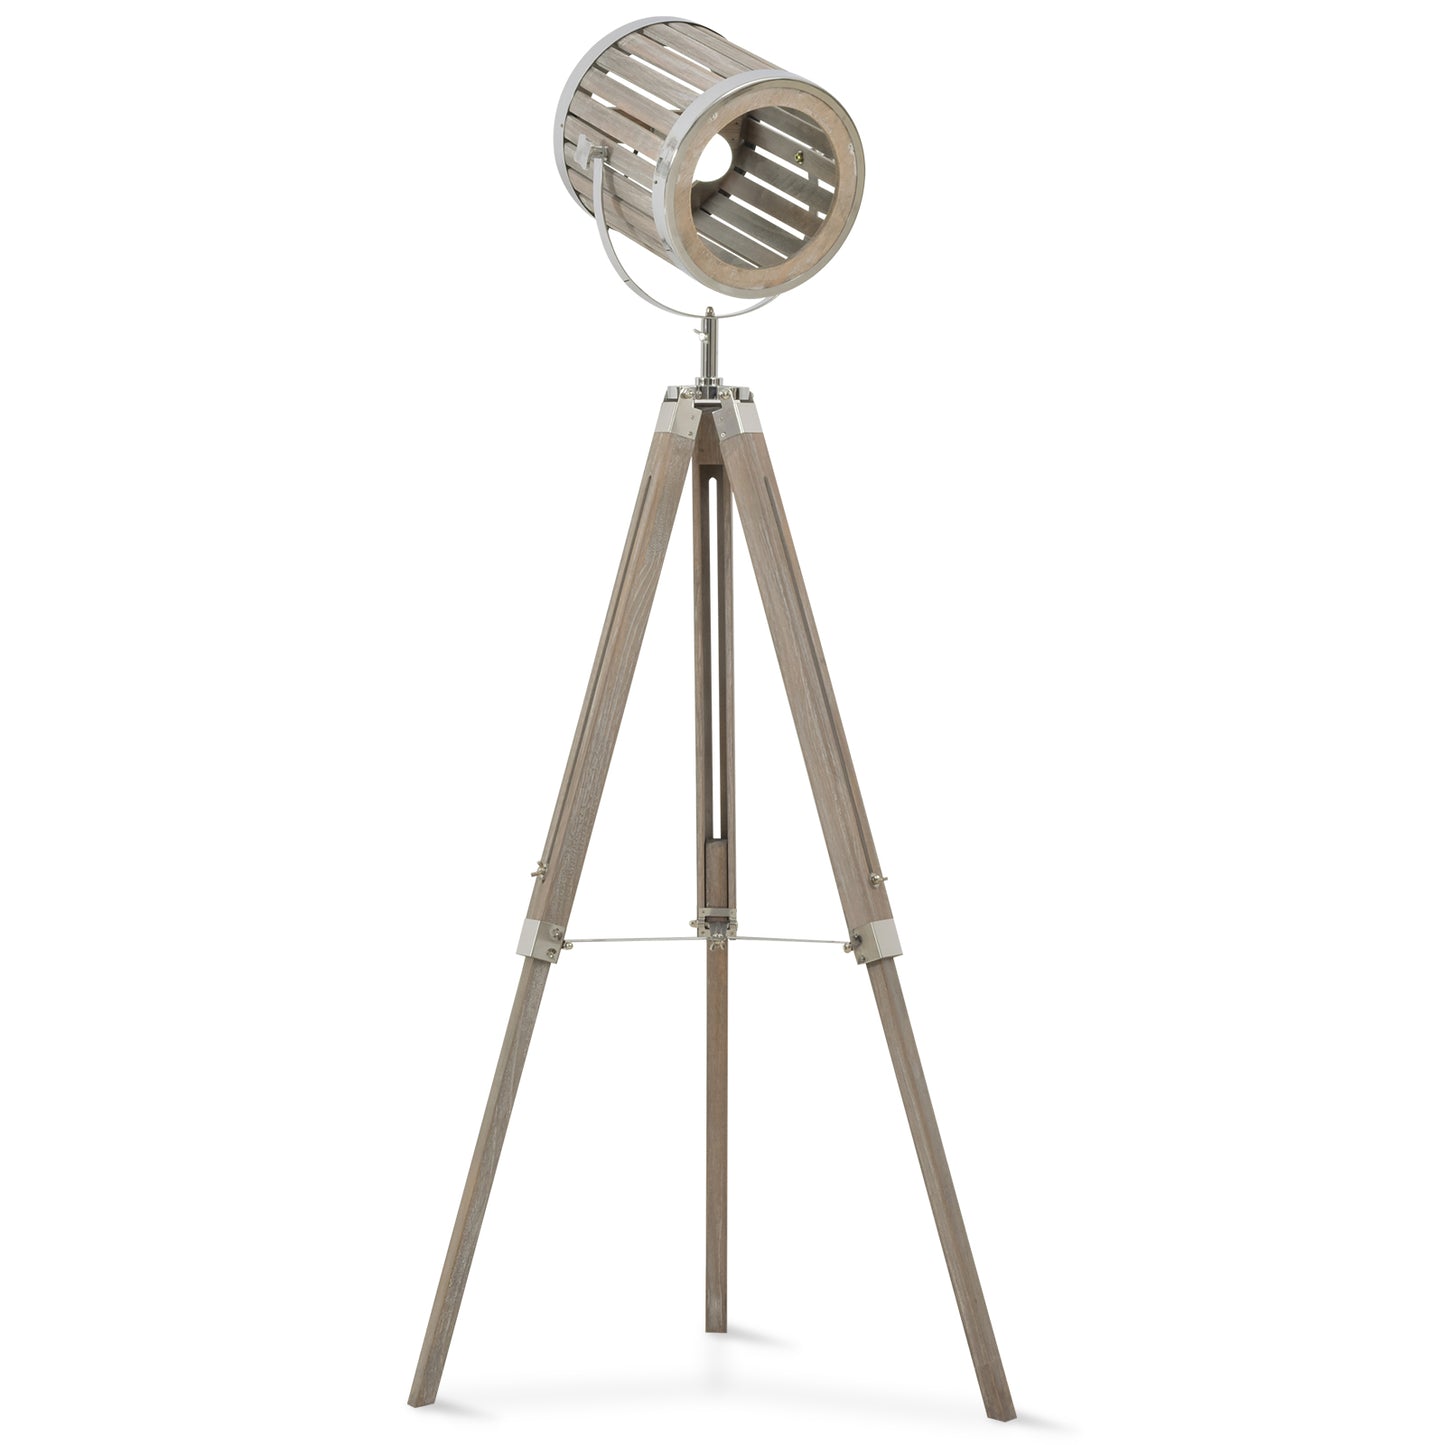 HOMCOM Pine Wood Tripod Floor Lamp Standing Lamp 110-150H x 63W x 63Dcm Brown and Silver